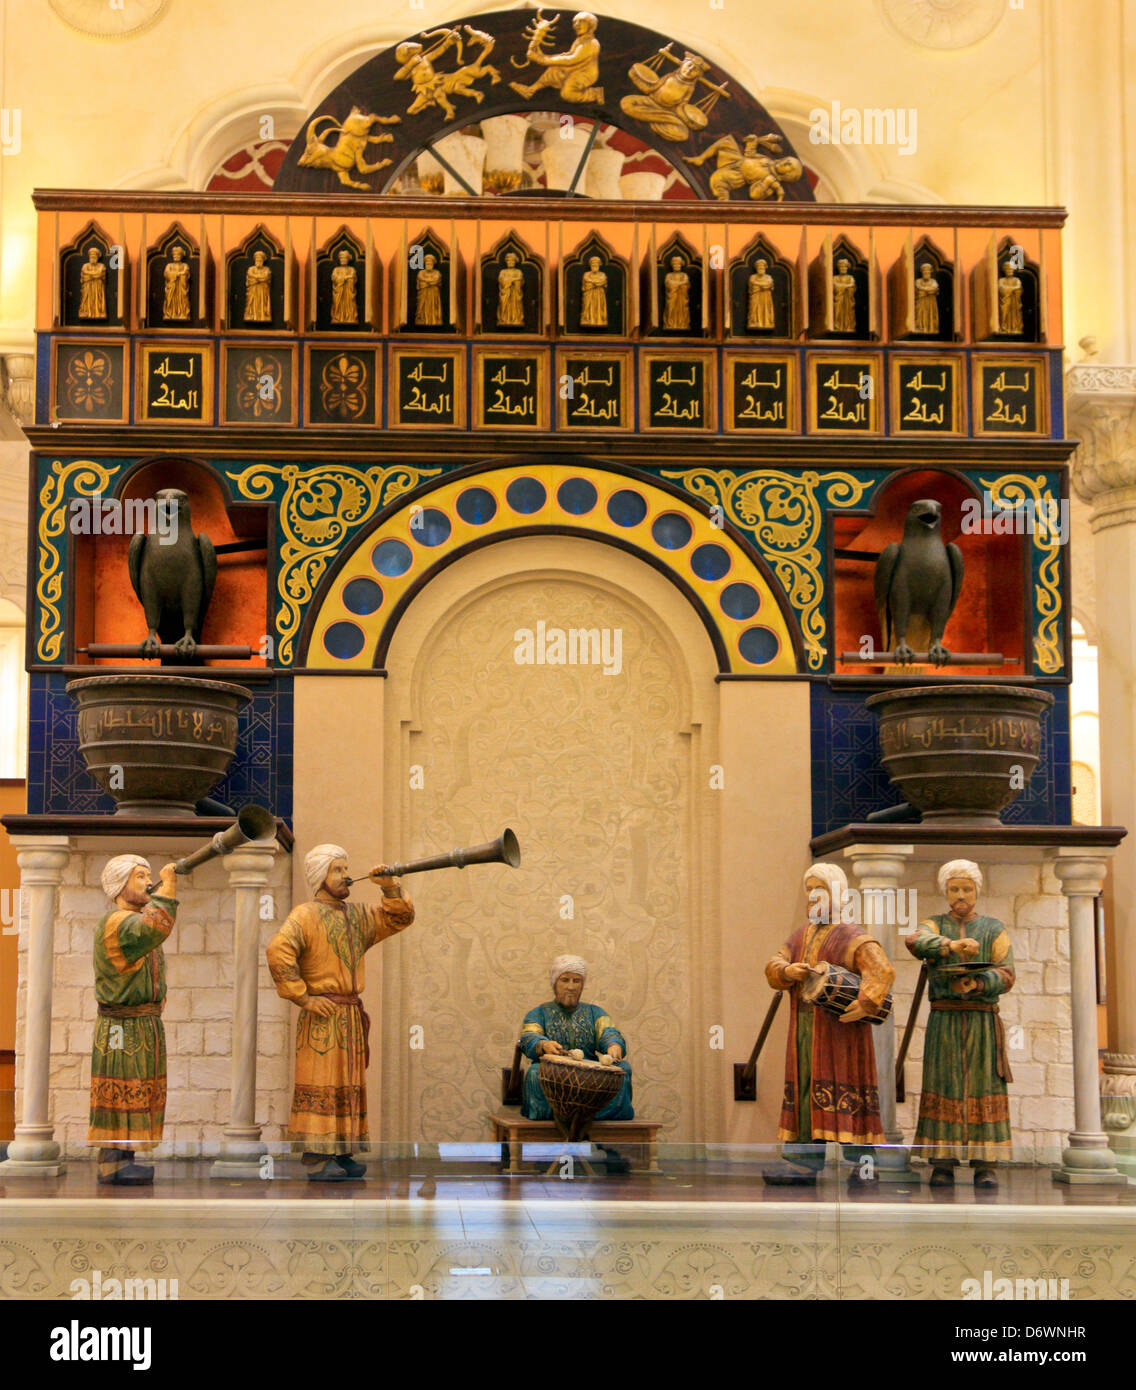 Model of a water operated clock, Ibn Battuta Shopping Mall, Jebel Ali, Dubai, United Arab Emirates Stock Photo